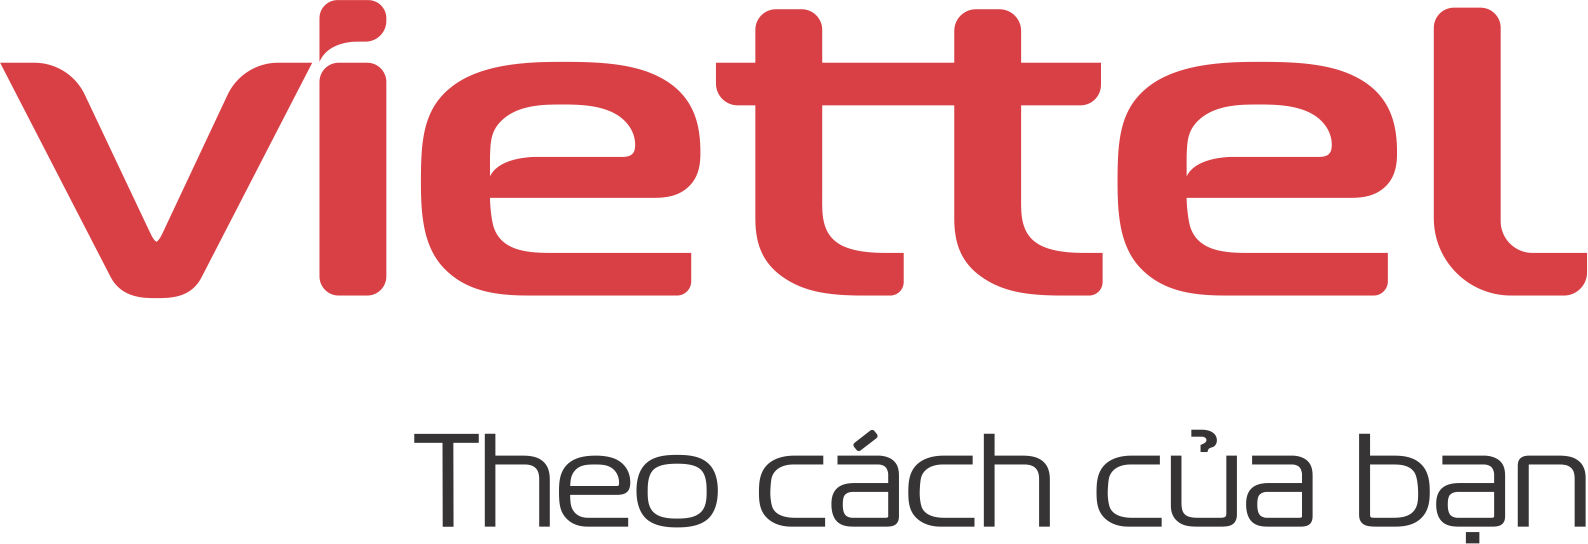 Vector logo Viettel đỏ PNG file CorelDRAW